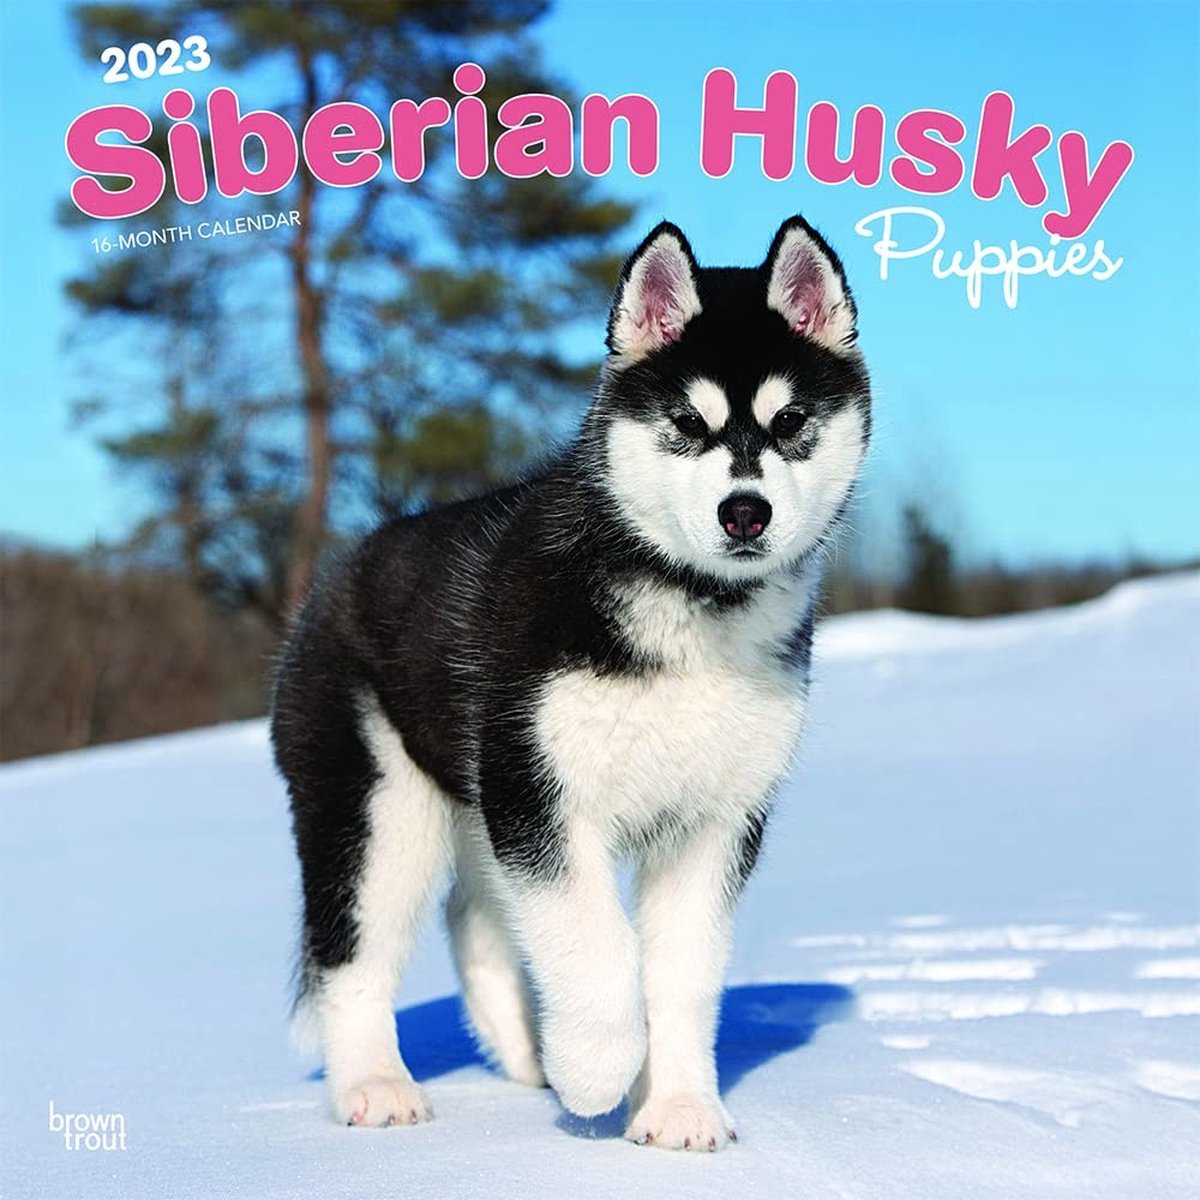 Siberian Husky Puppies Kalender 2023